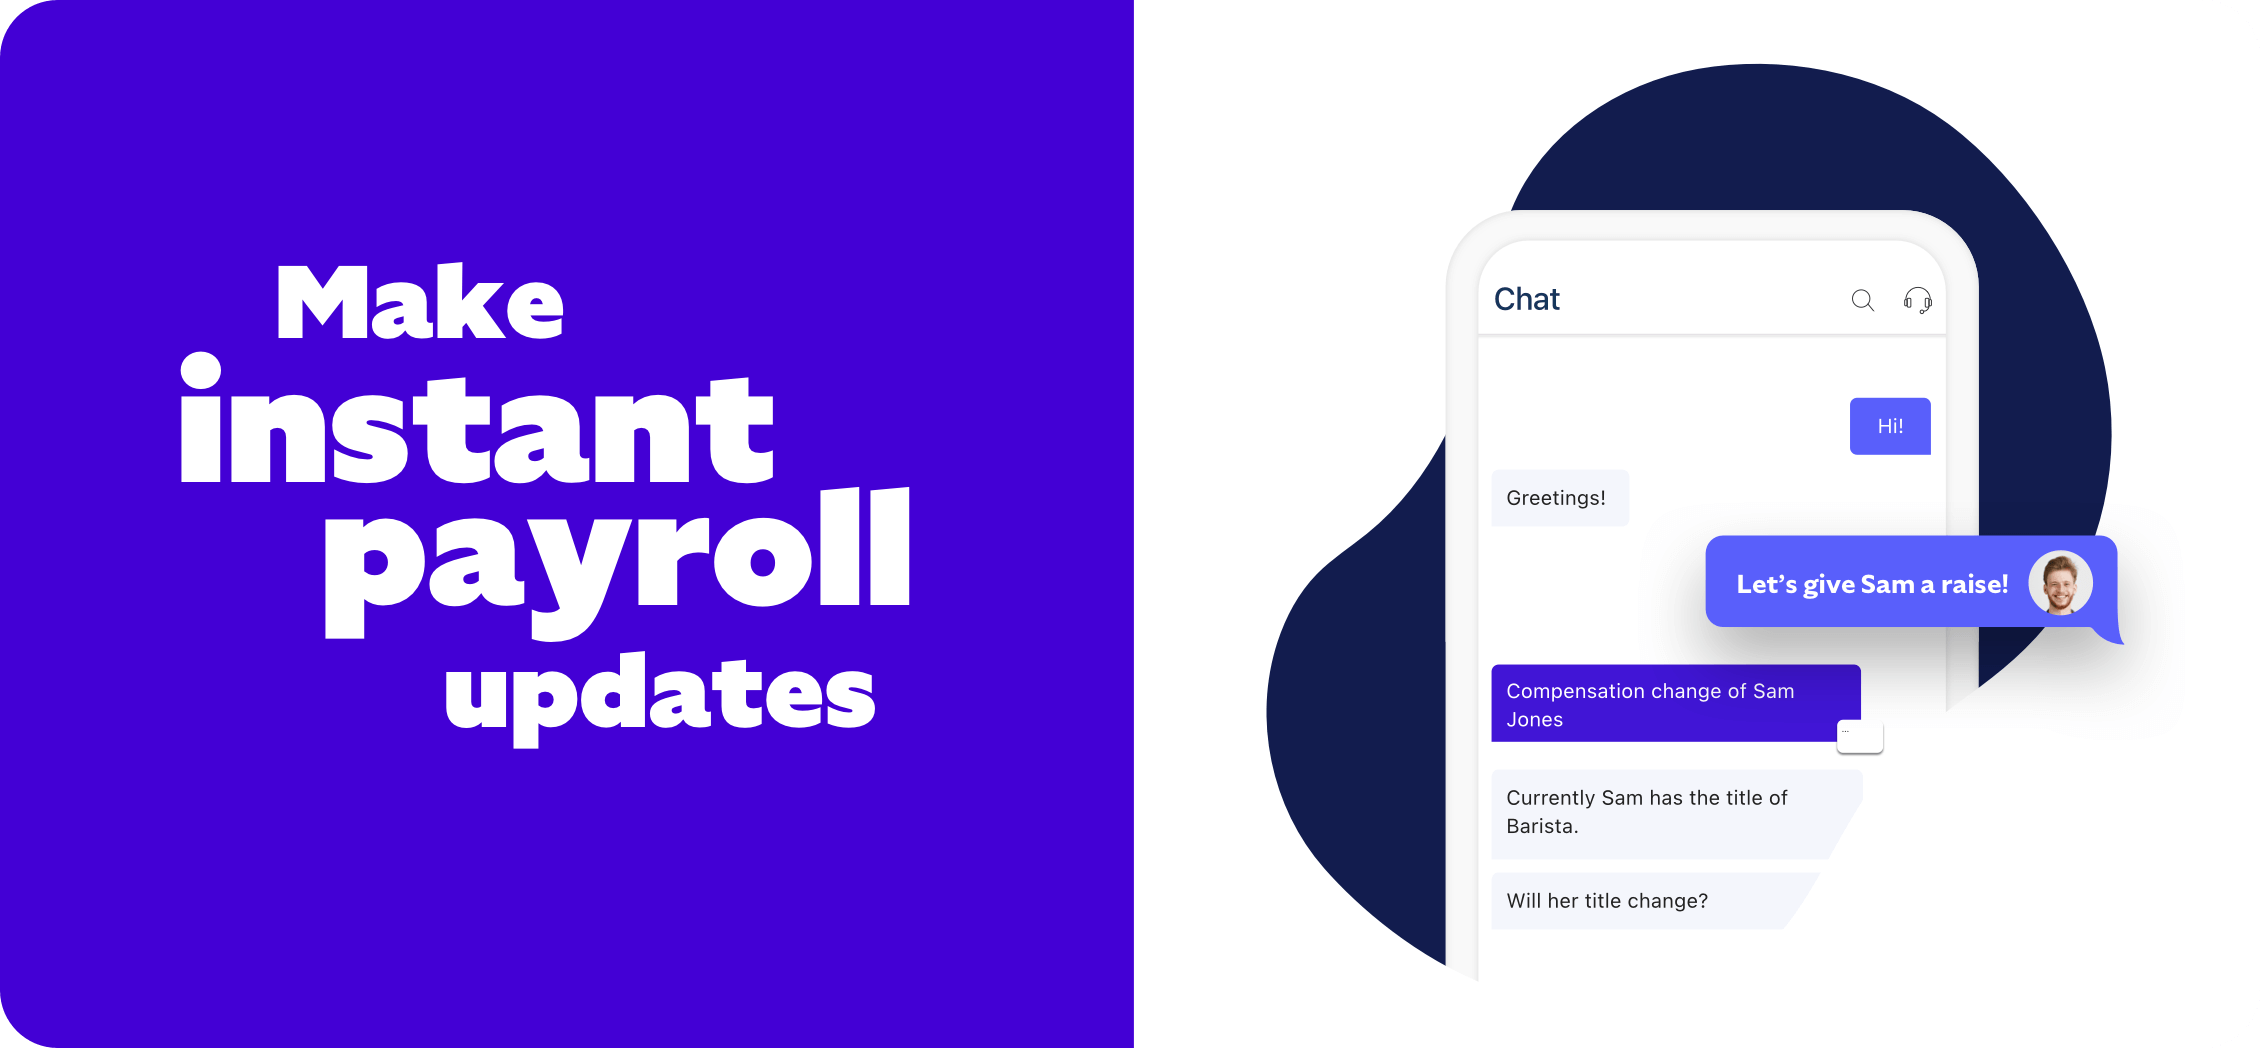 Make instant payroll updates